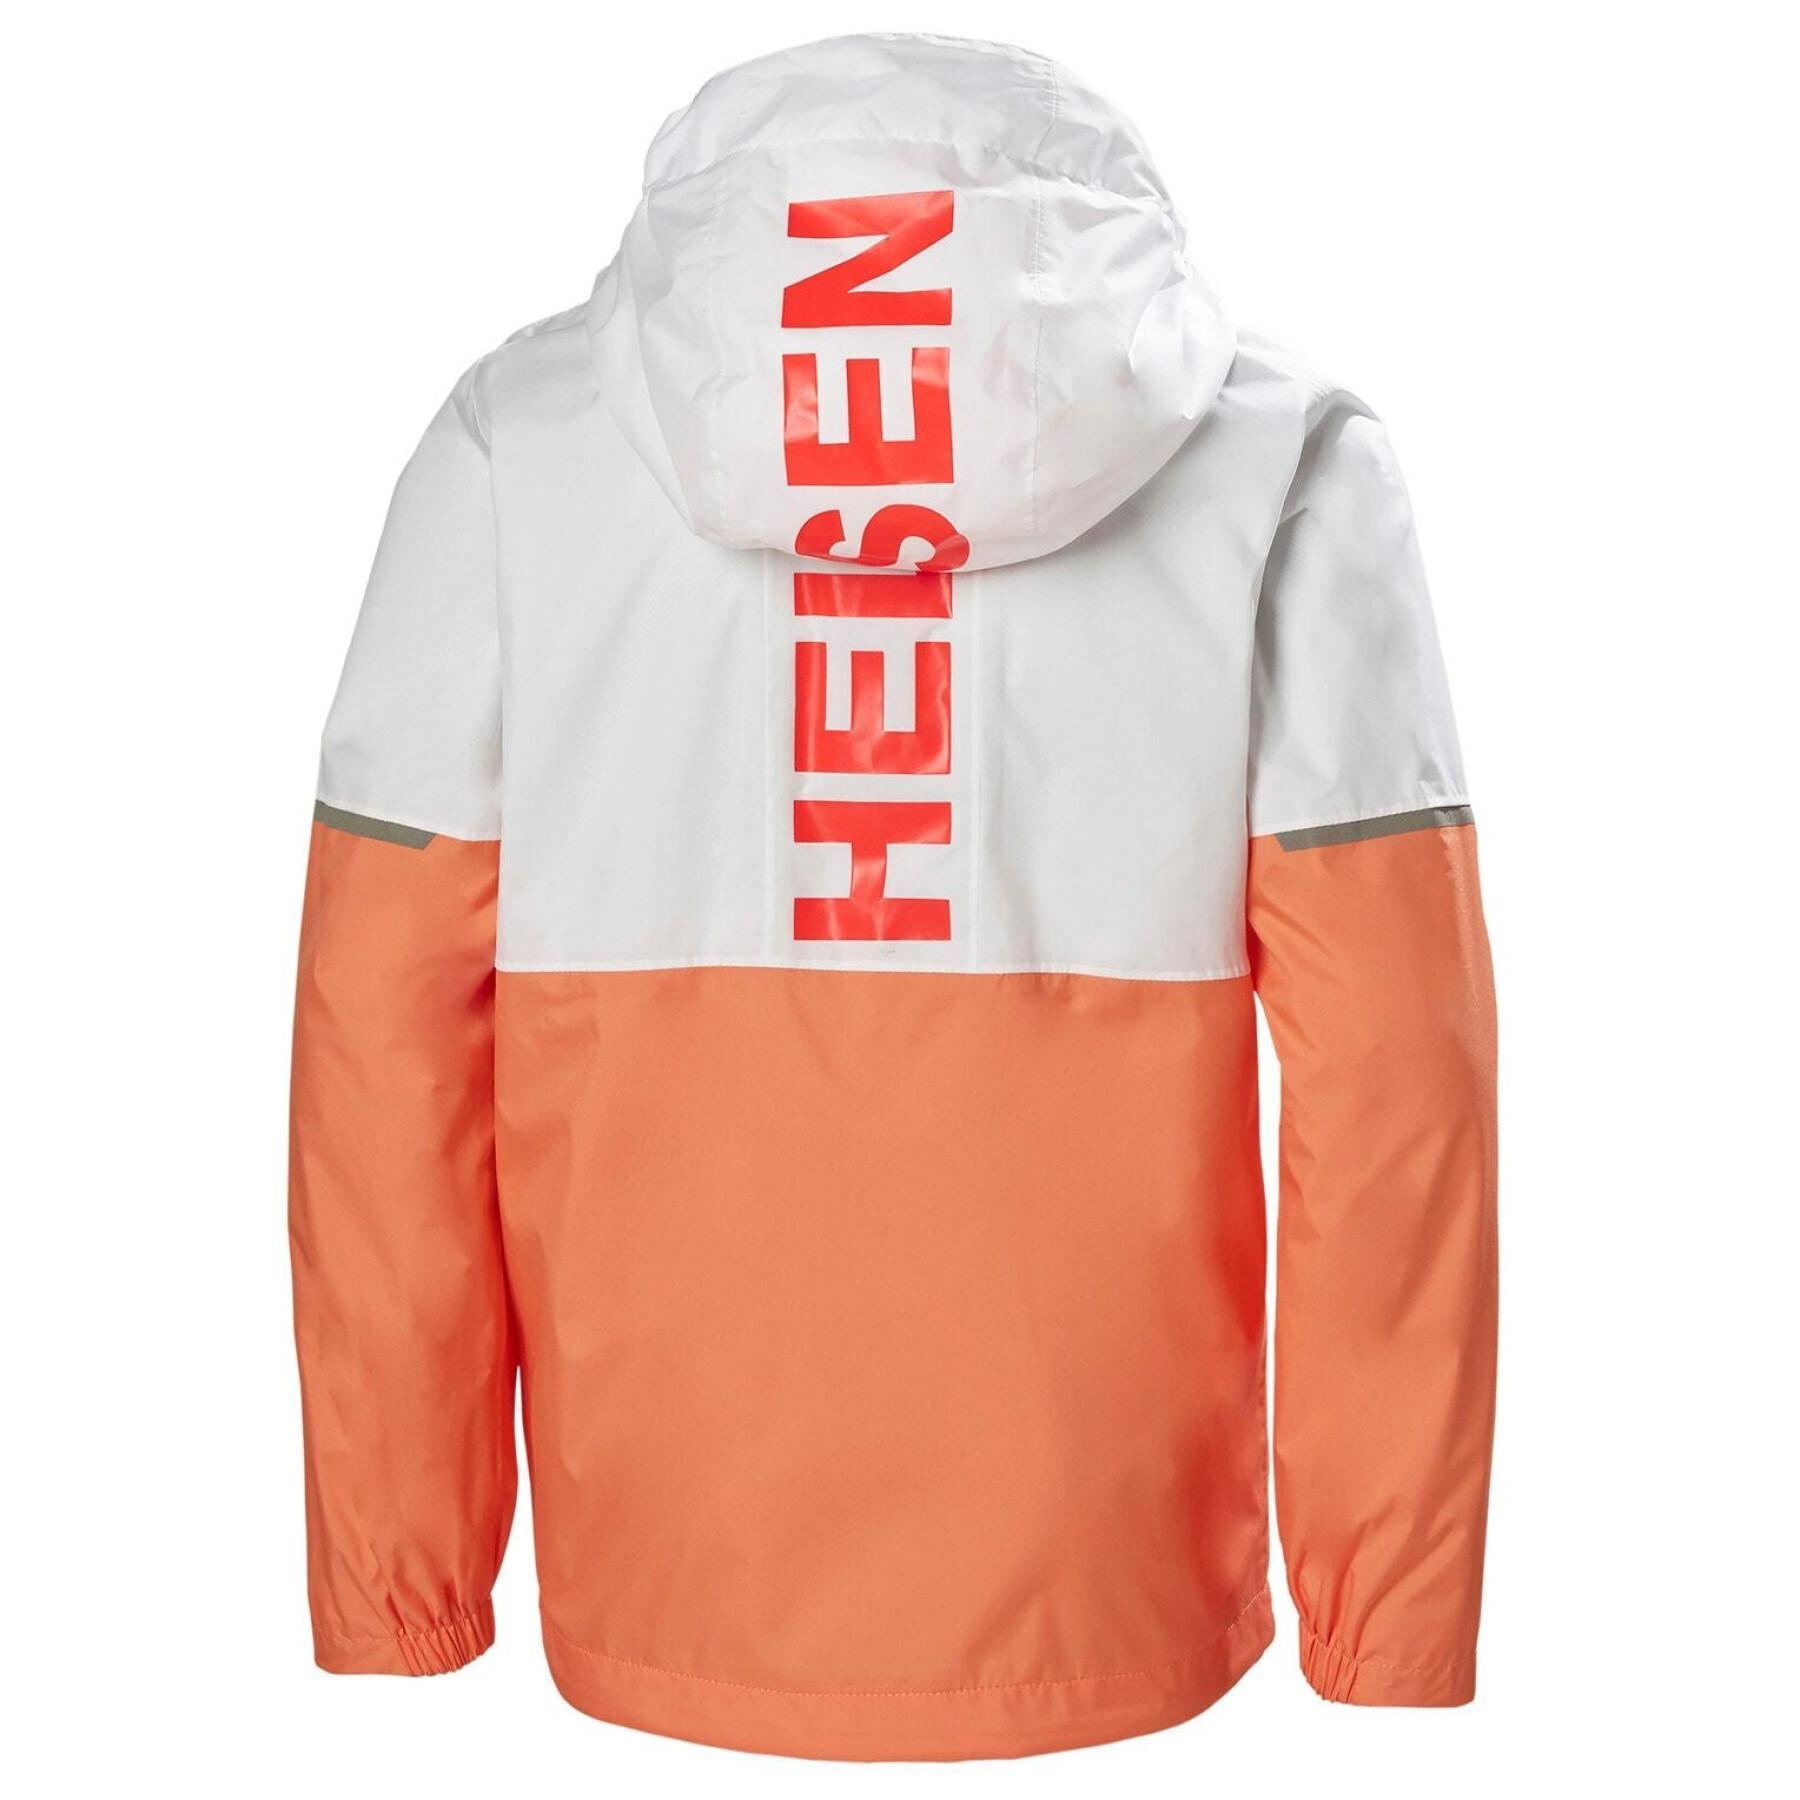 Waterproof tracking jacket for children Helly Hansen